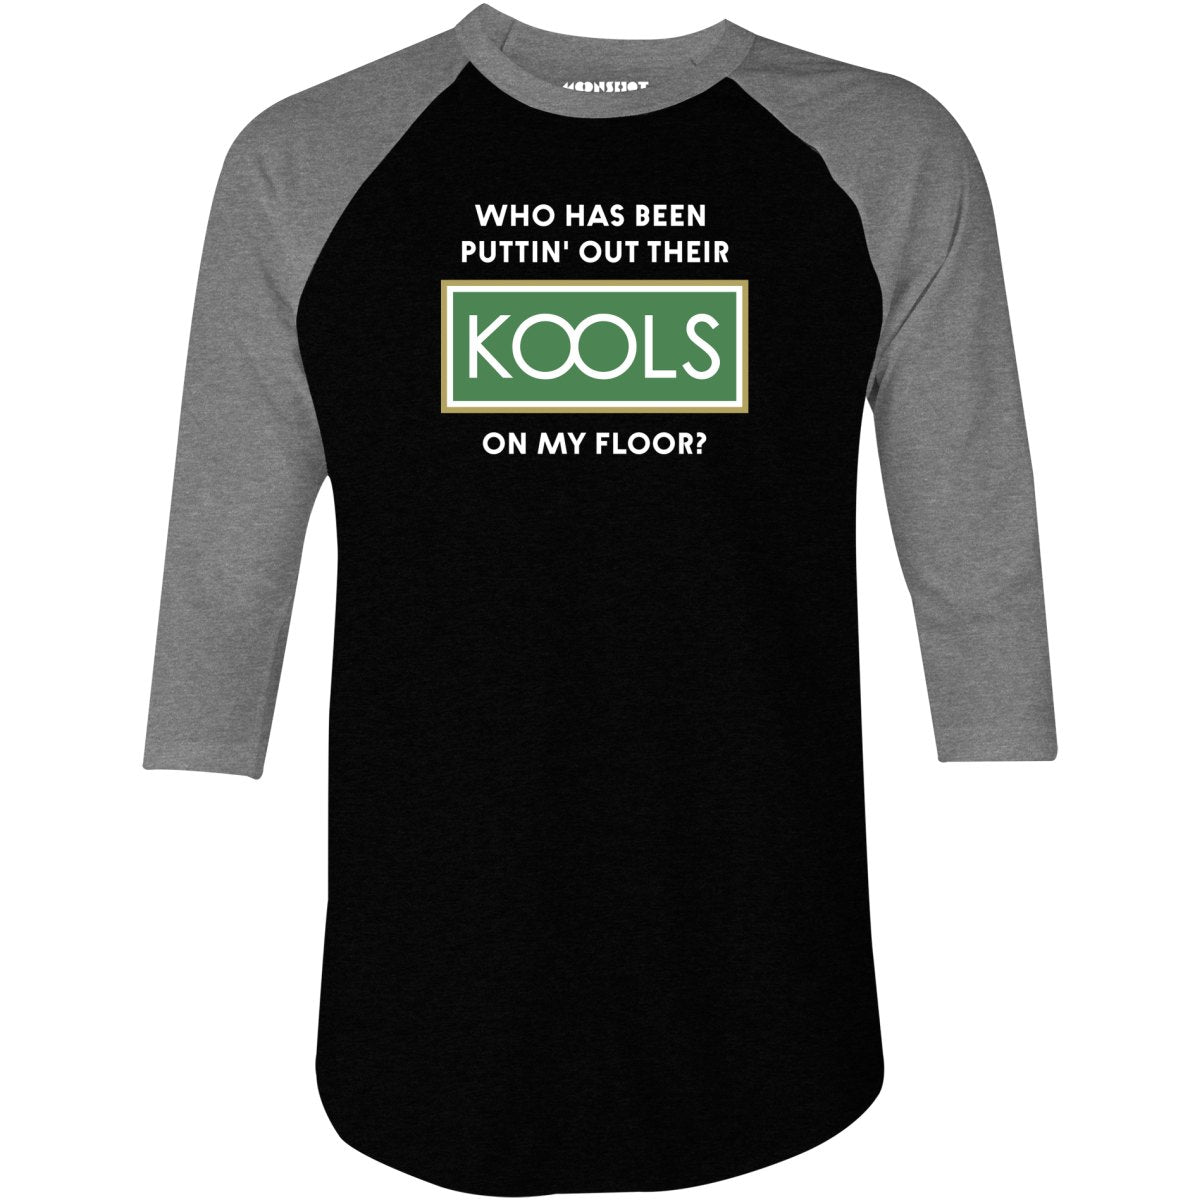 Who Has Been Puttin' Out Their Kools On My Floor? - 3/4 Sleeve Raglan T-Shirt